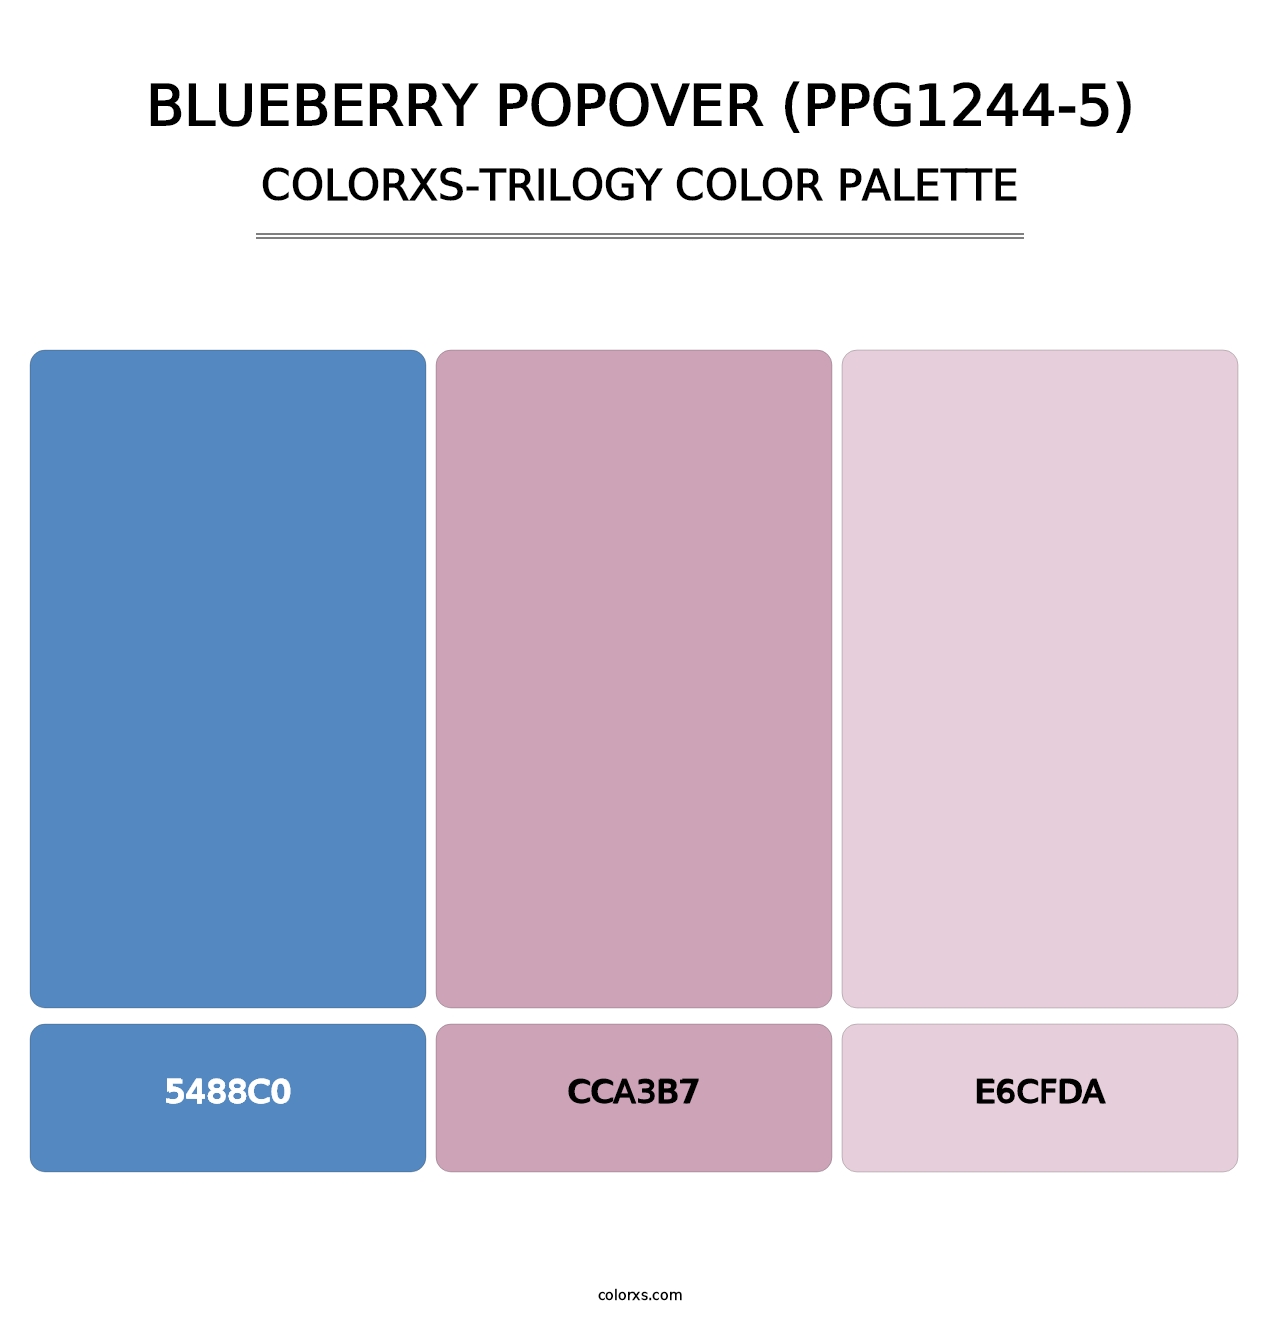 Blueberry Popover (PPG1244-5) - Colorxs Trilogy Palette